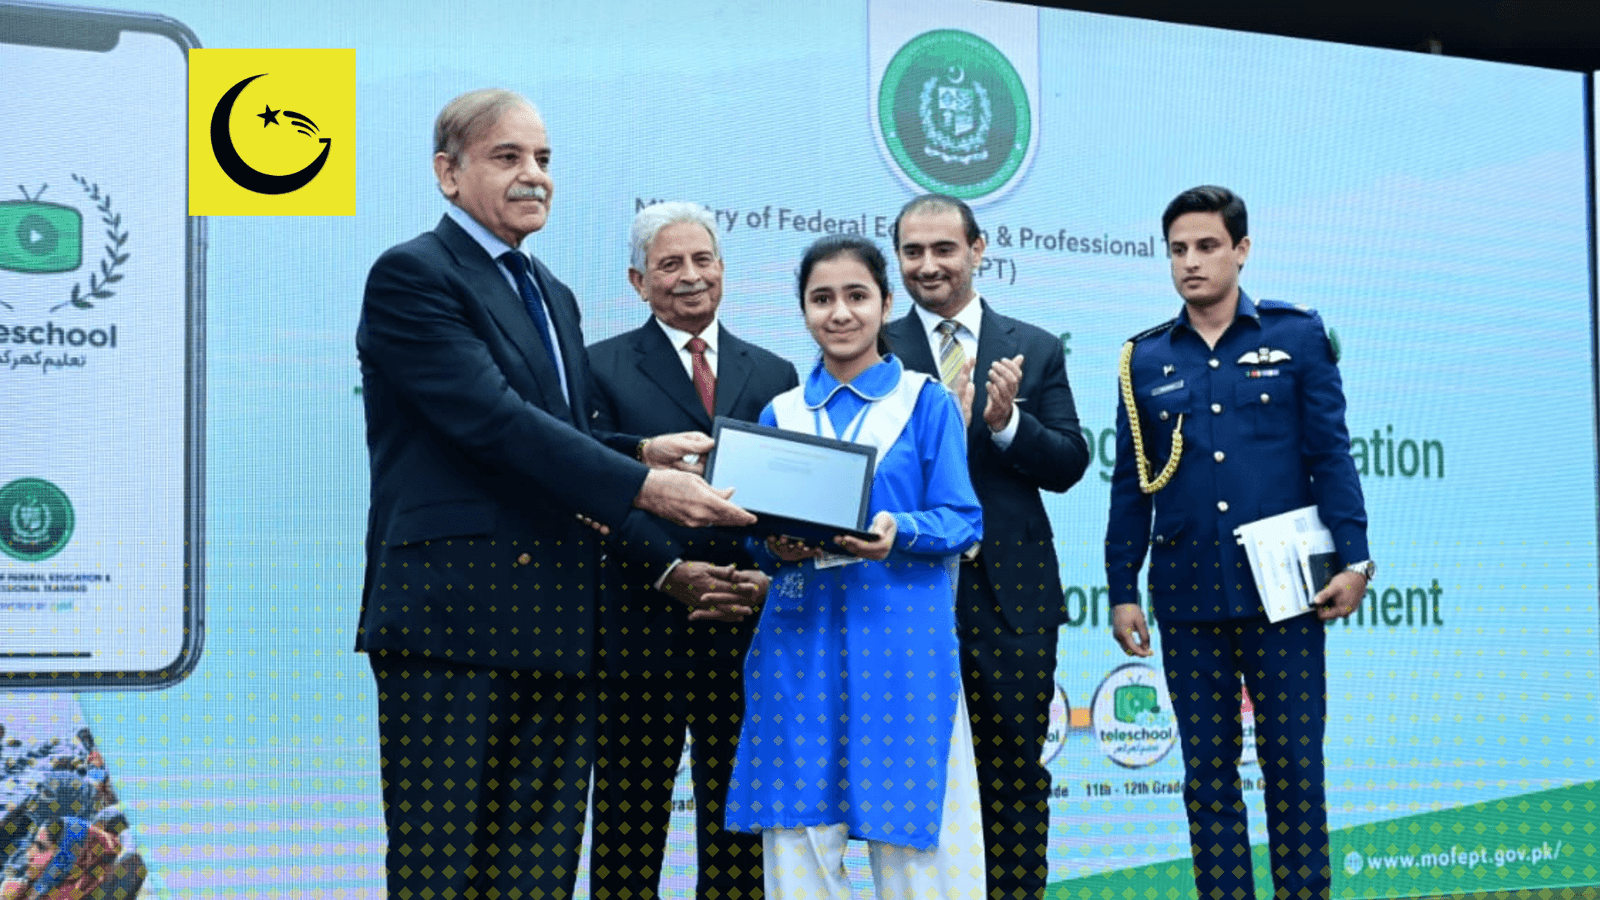 PM Inaugurates ‘Teleschool Pakistan’ for Free Online Education - Good News Pakistan